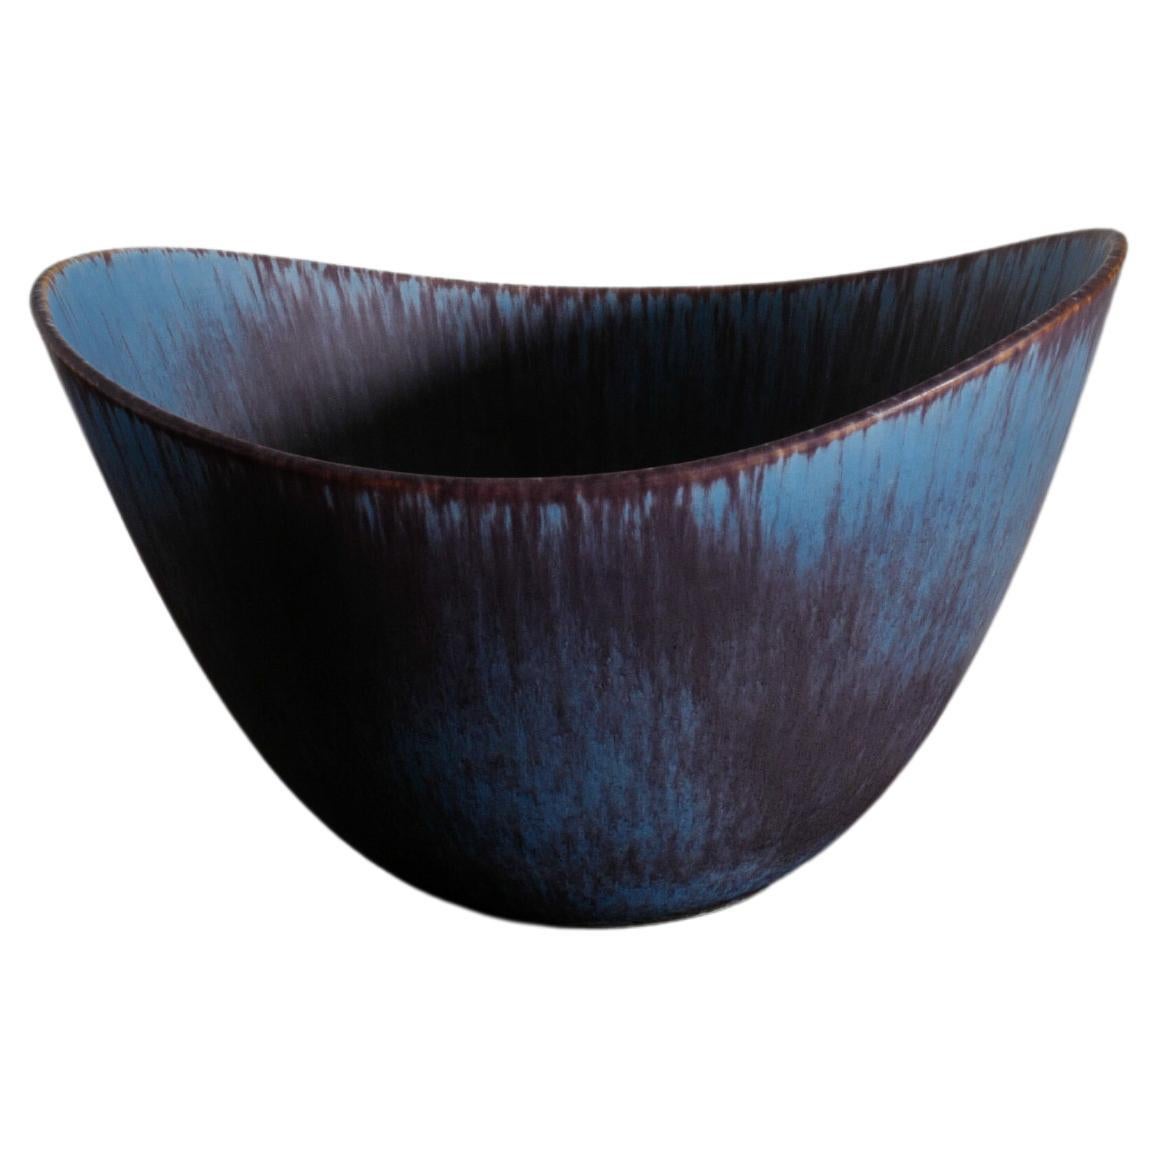 Gunnar Nylund "AXK" Large Ceramic Bowl in Blue for Rörstrand Sweden, 1950s